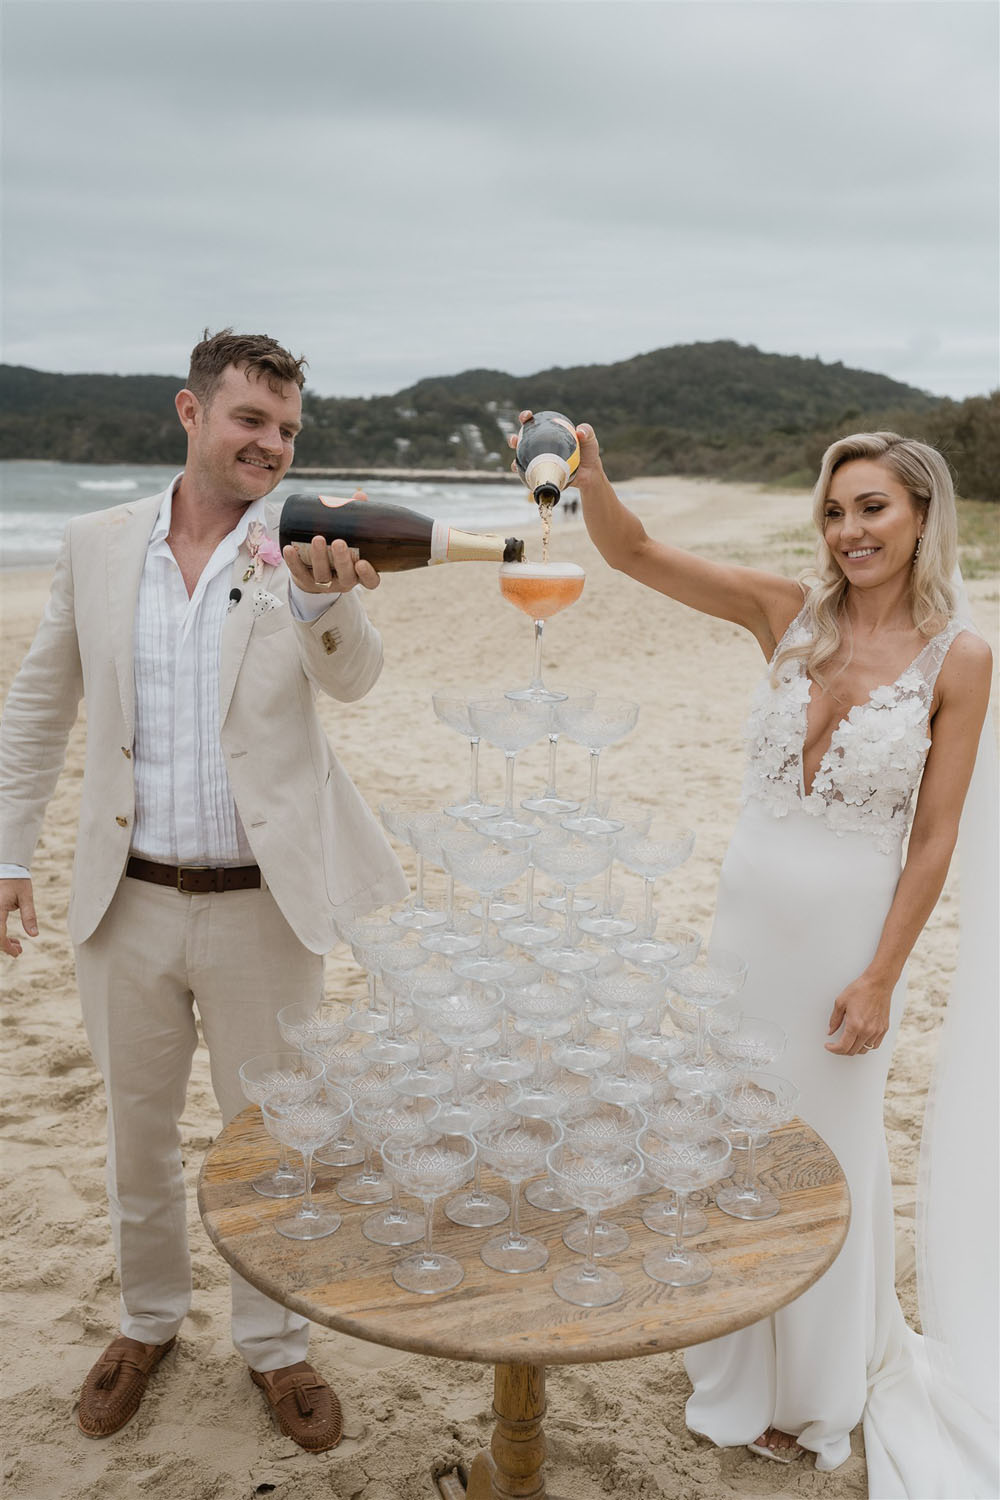 Champagne tower at coastal Australian wedding